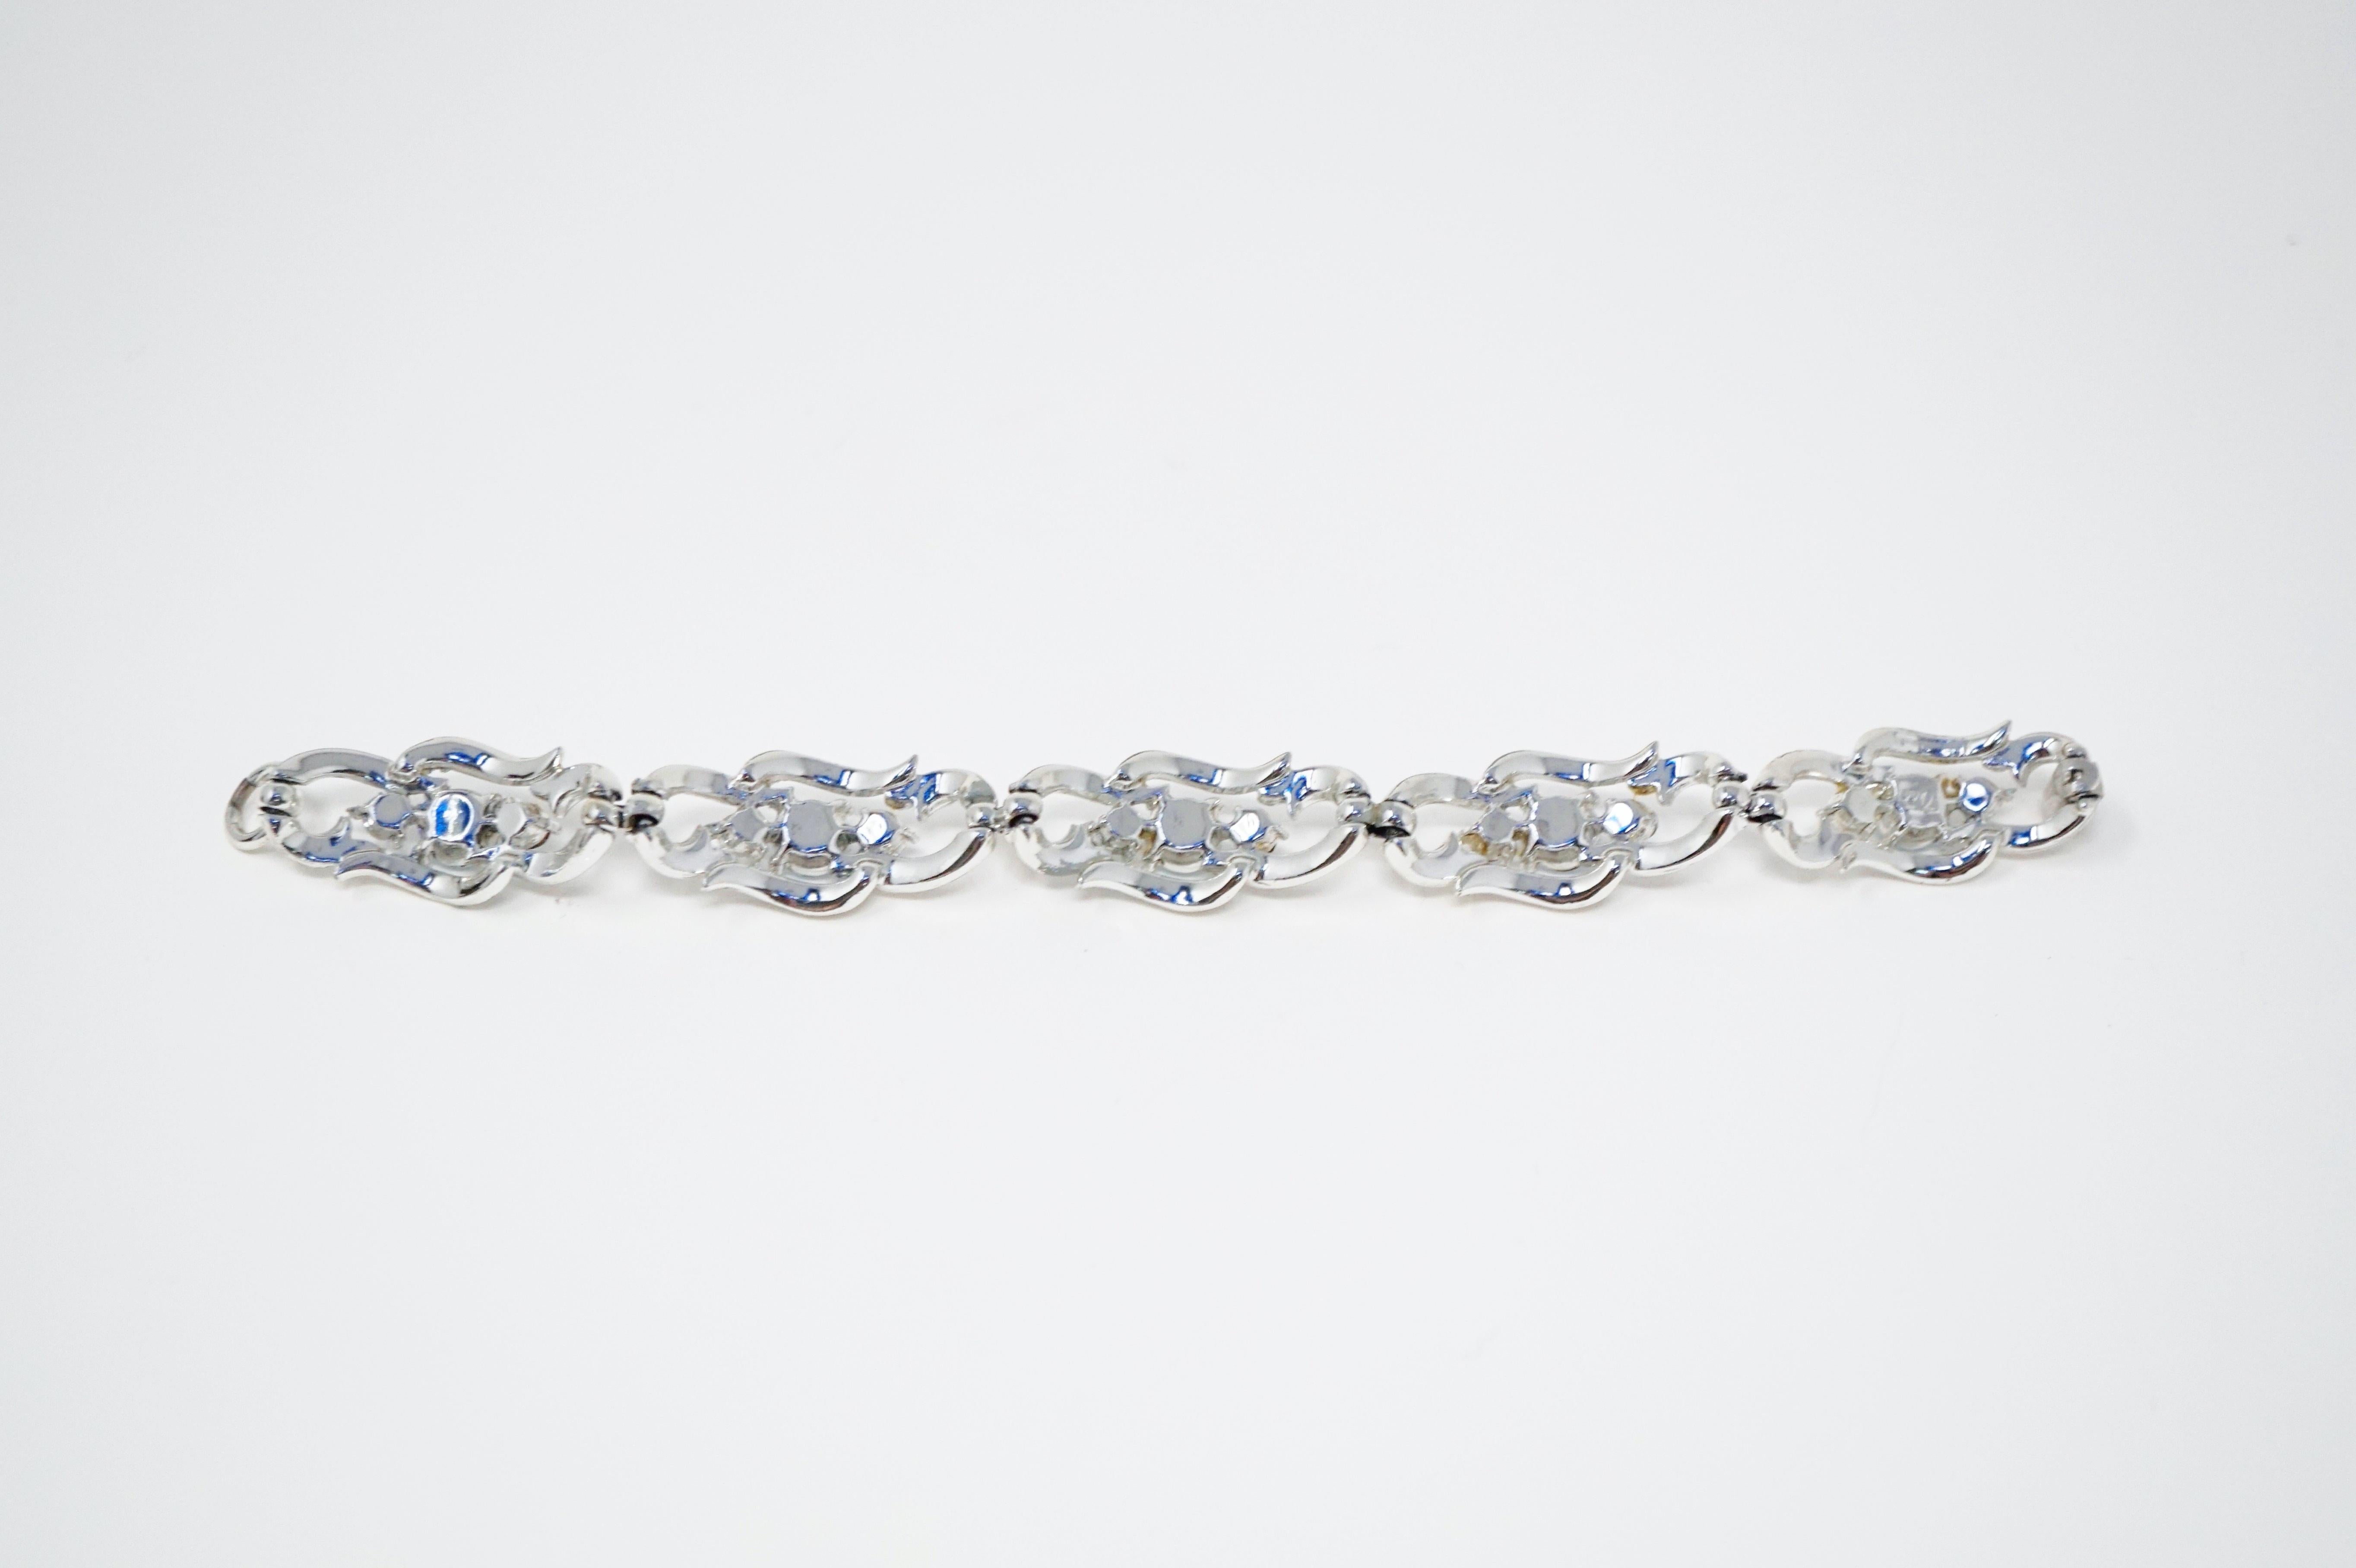 Vintage Baby Blue Crystal Rhinestone Bracelet by Coro, Signed, circa 1950s 1